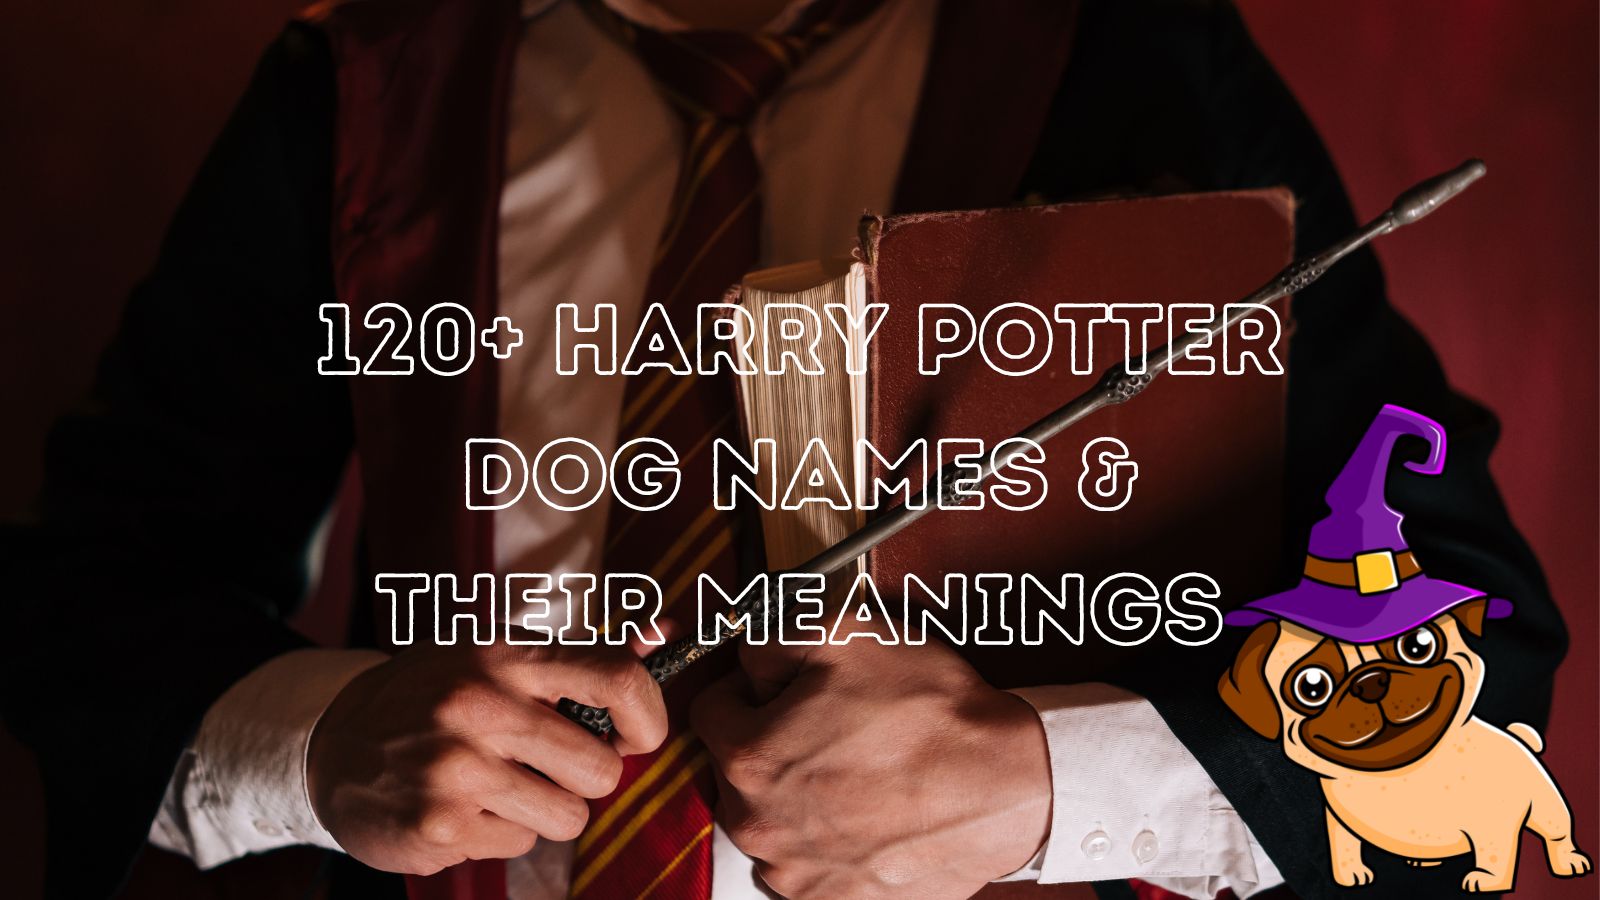 harry potter creatures names